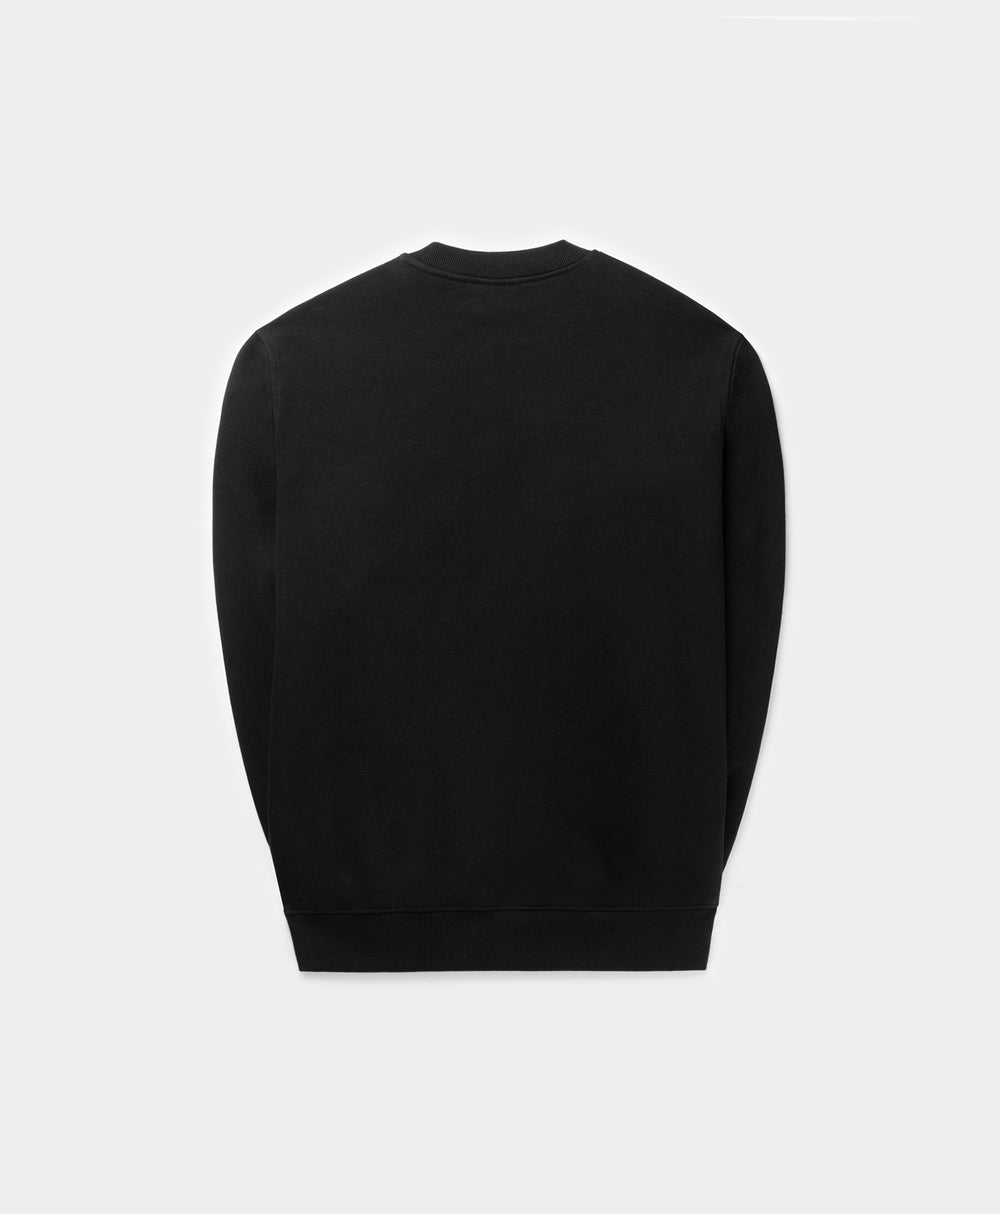 DP - Black Alias Sweater - Packshot - Rear